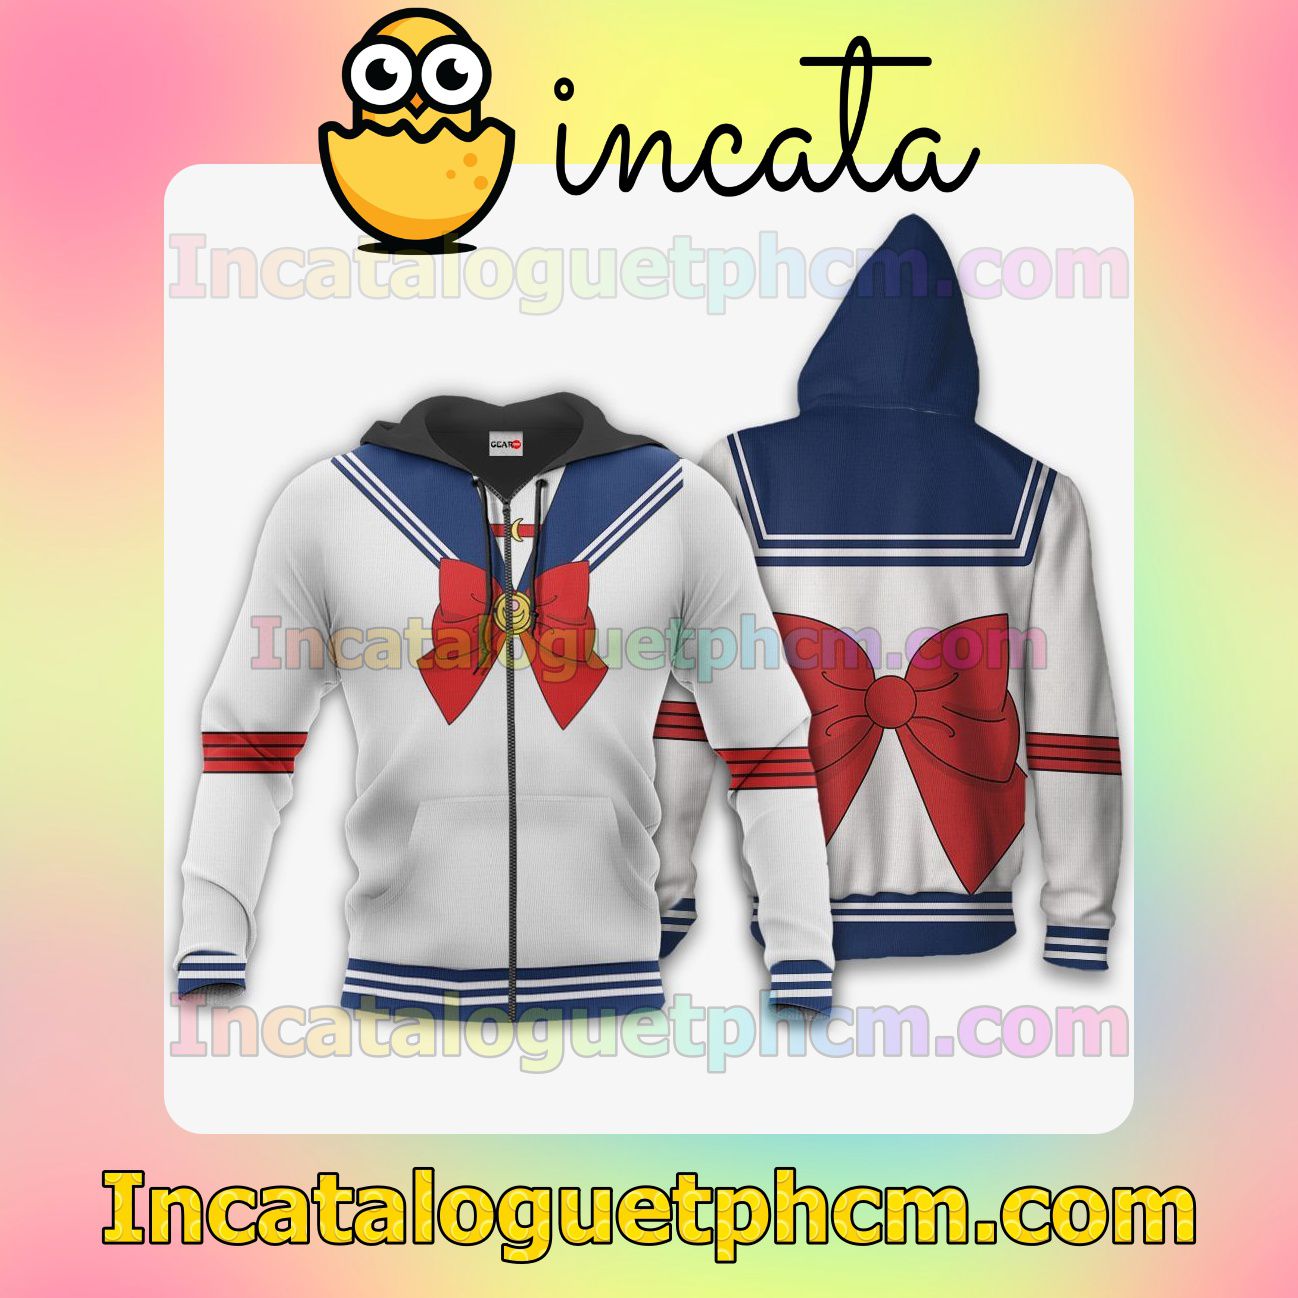 Sailor Moon Uniform Sailor Anime Clothing Merch Zip Hoodie Jacket Shirts